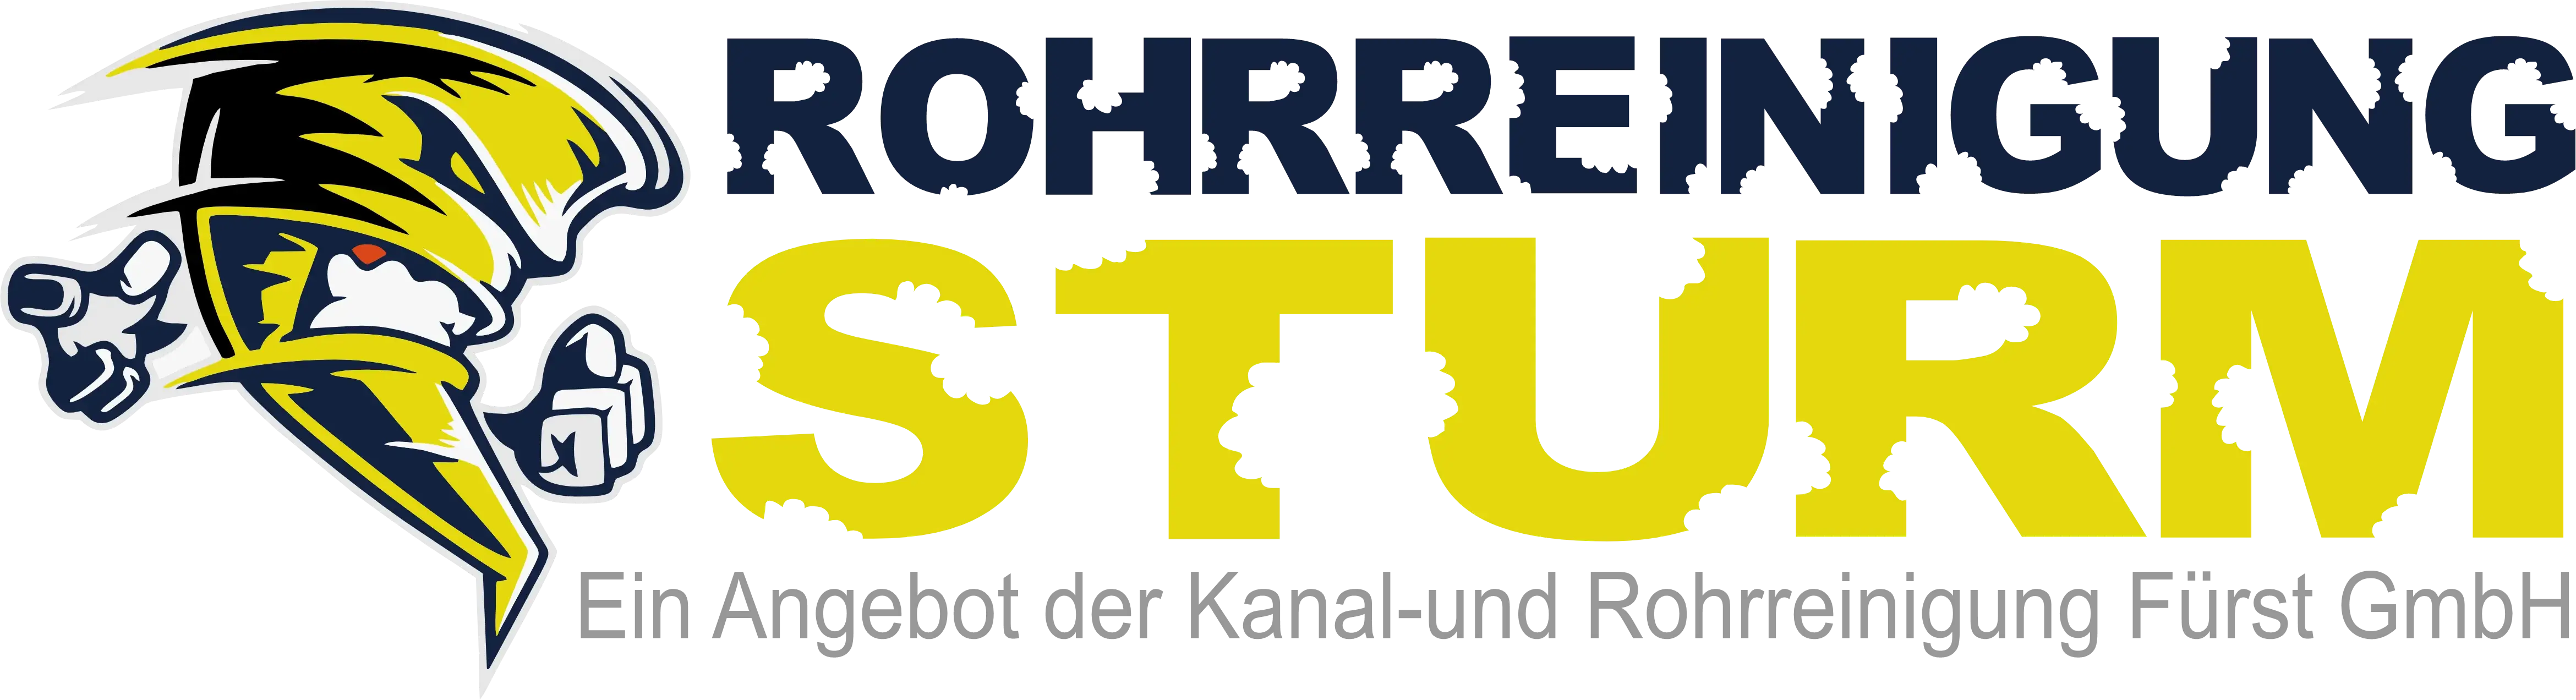 Rohrreinigung in Kelsterbach Logo